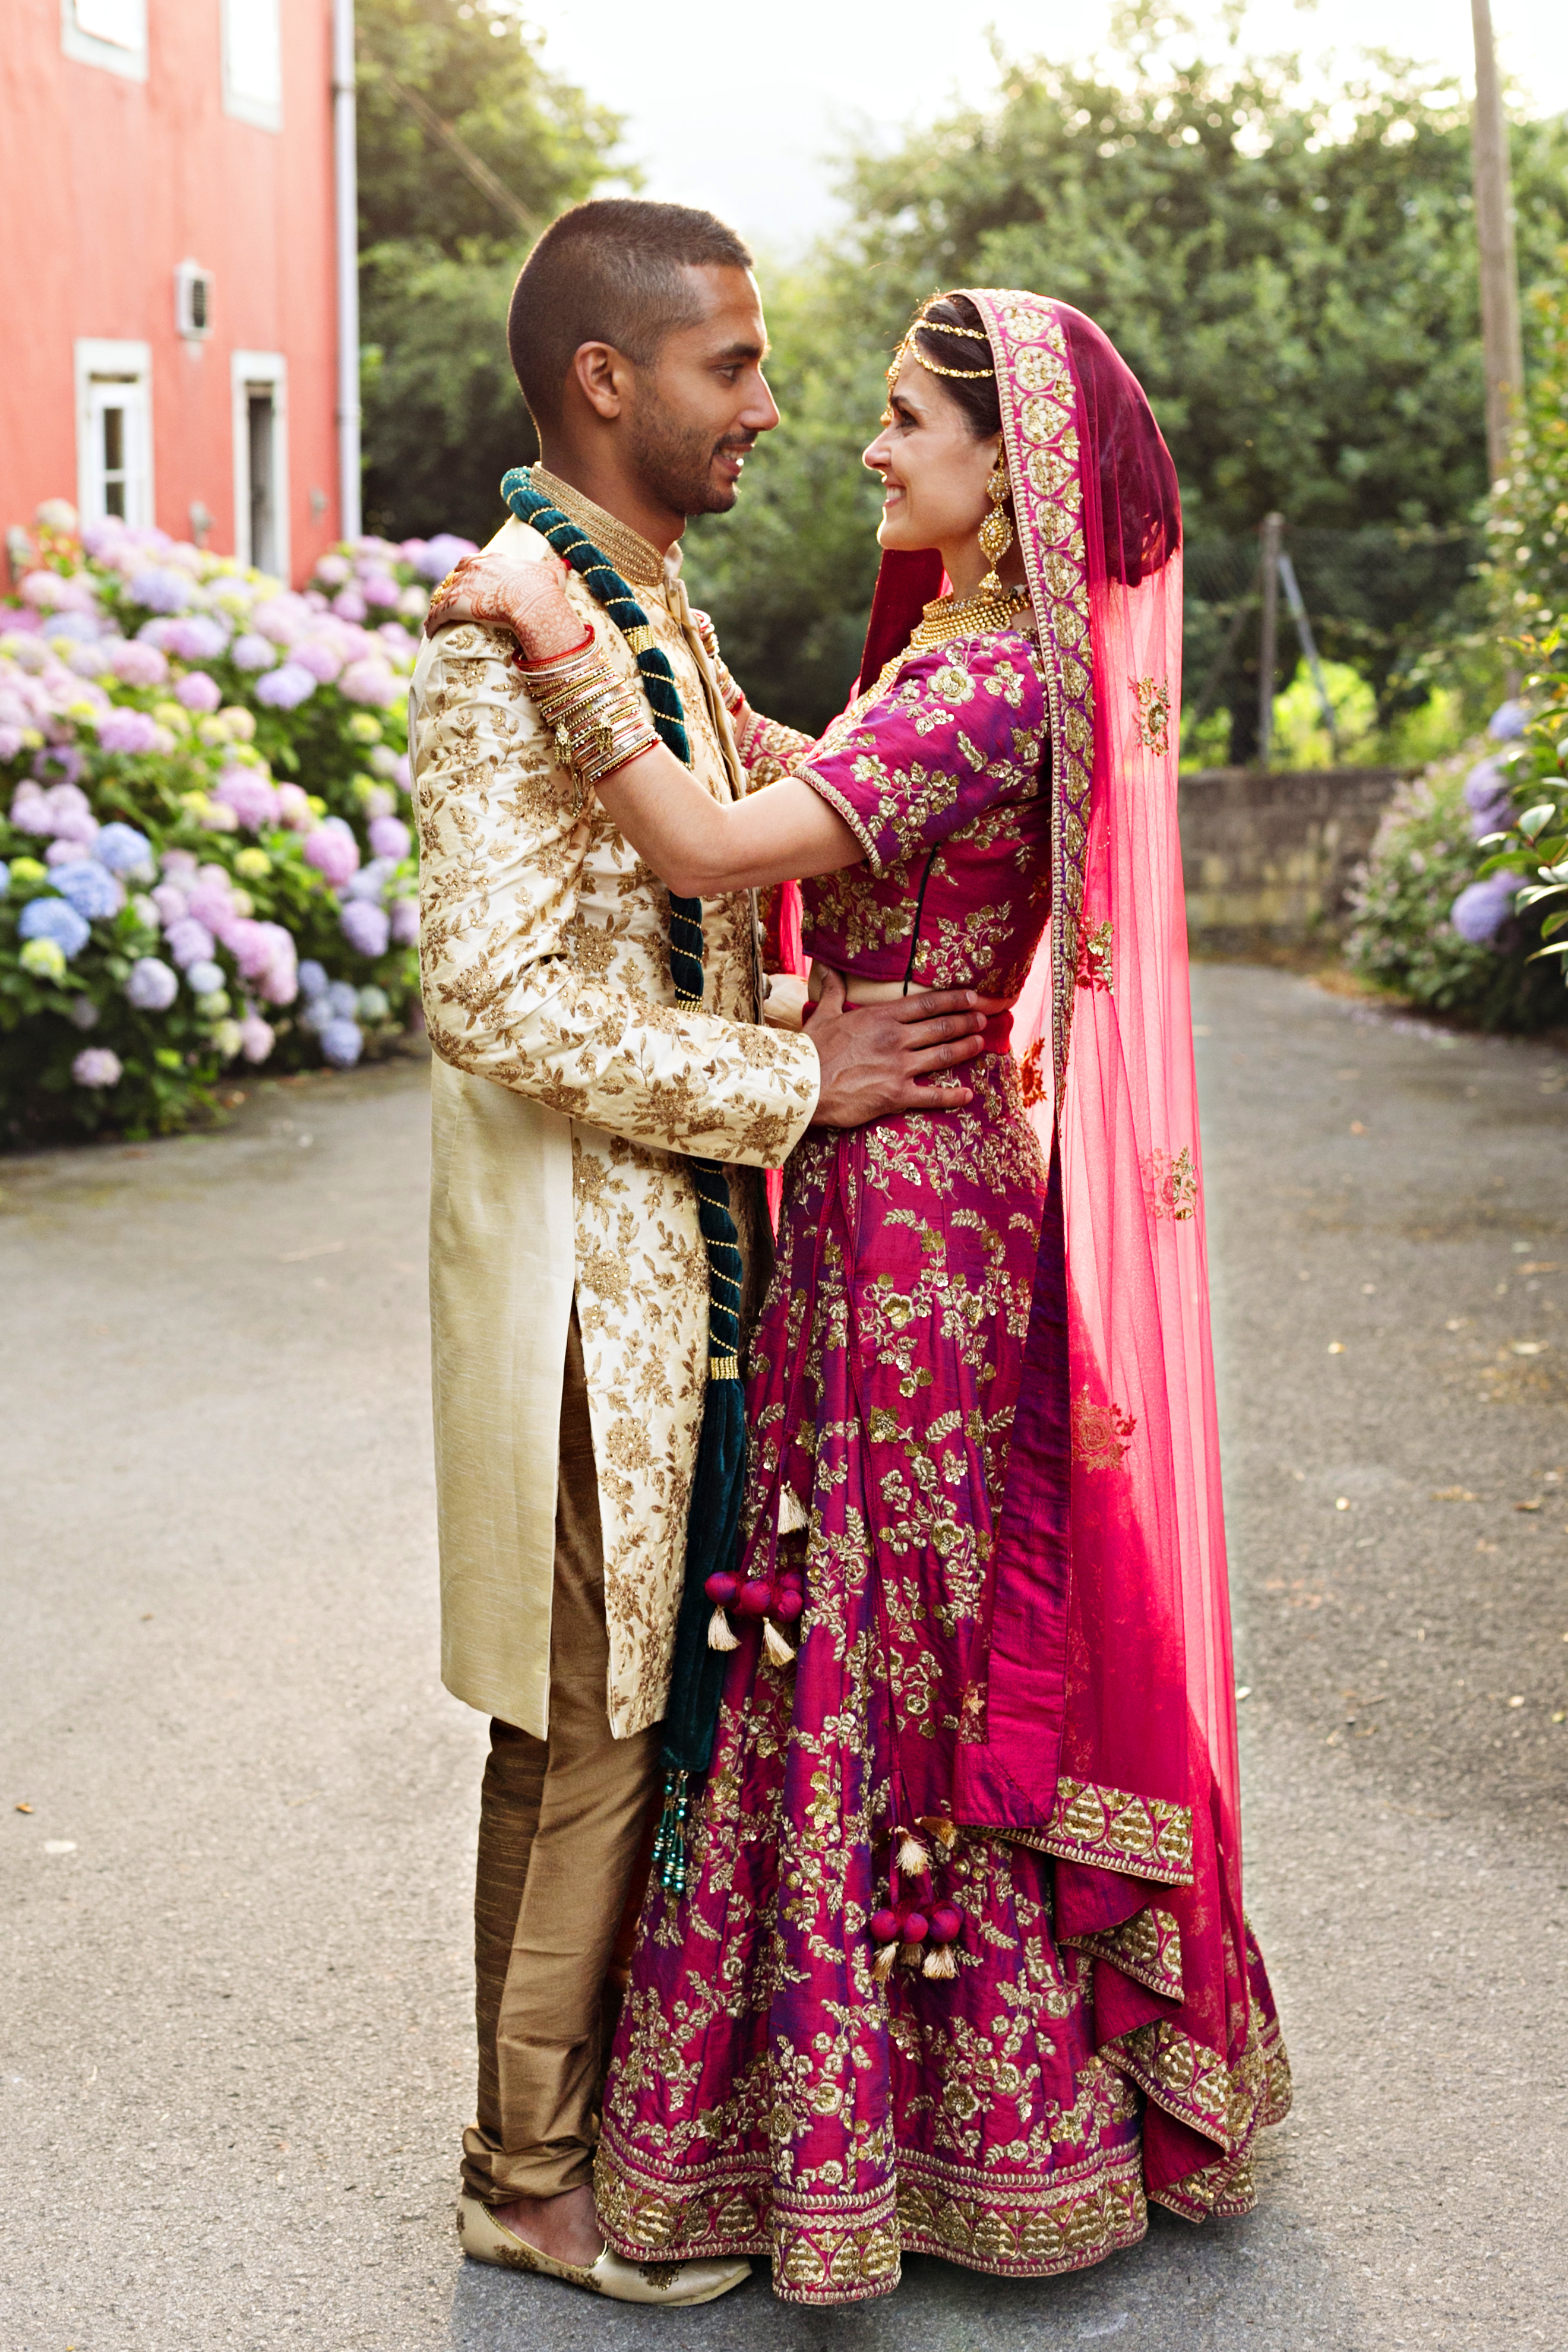 Fotos de boda hindú